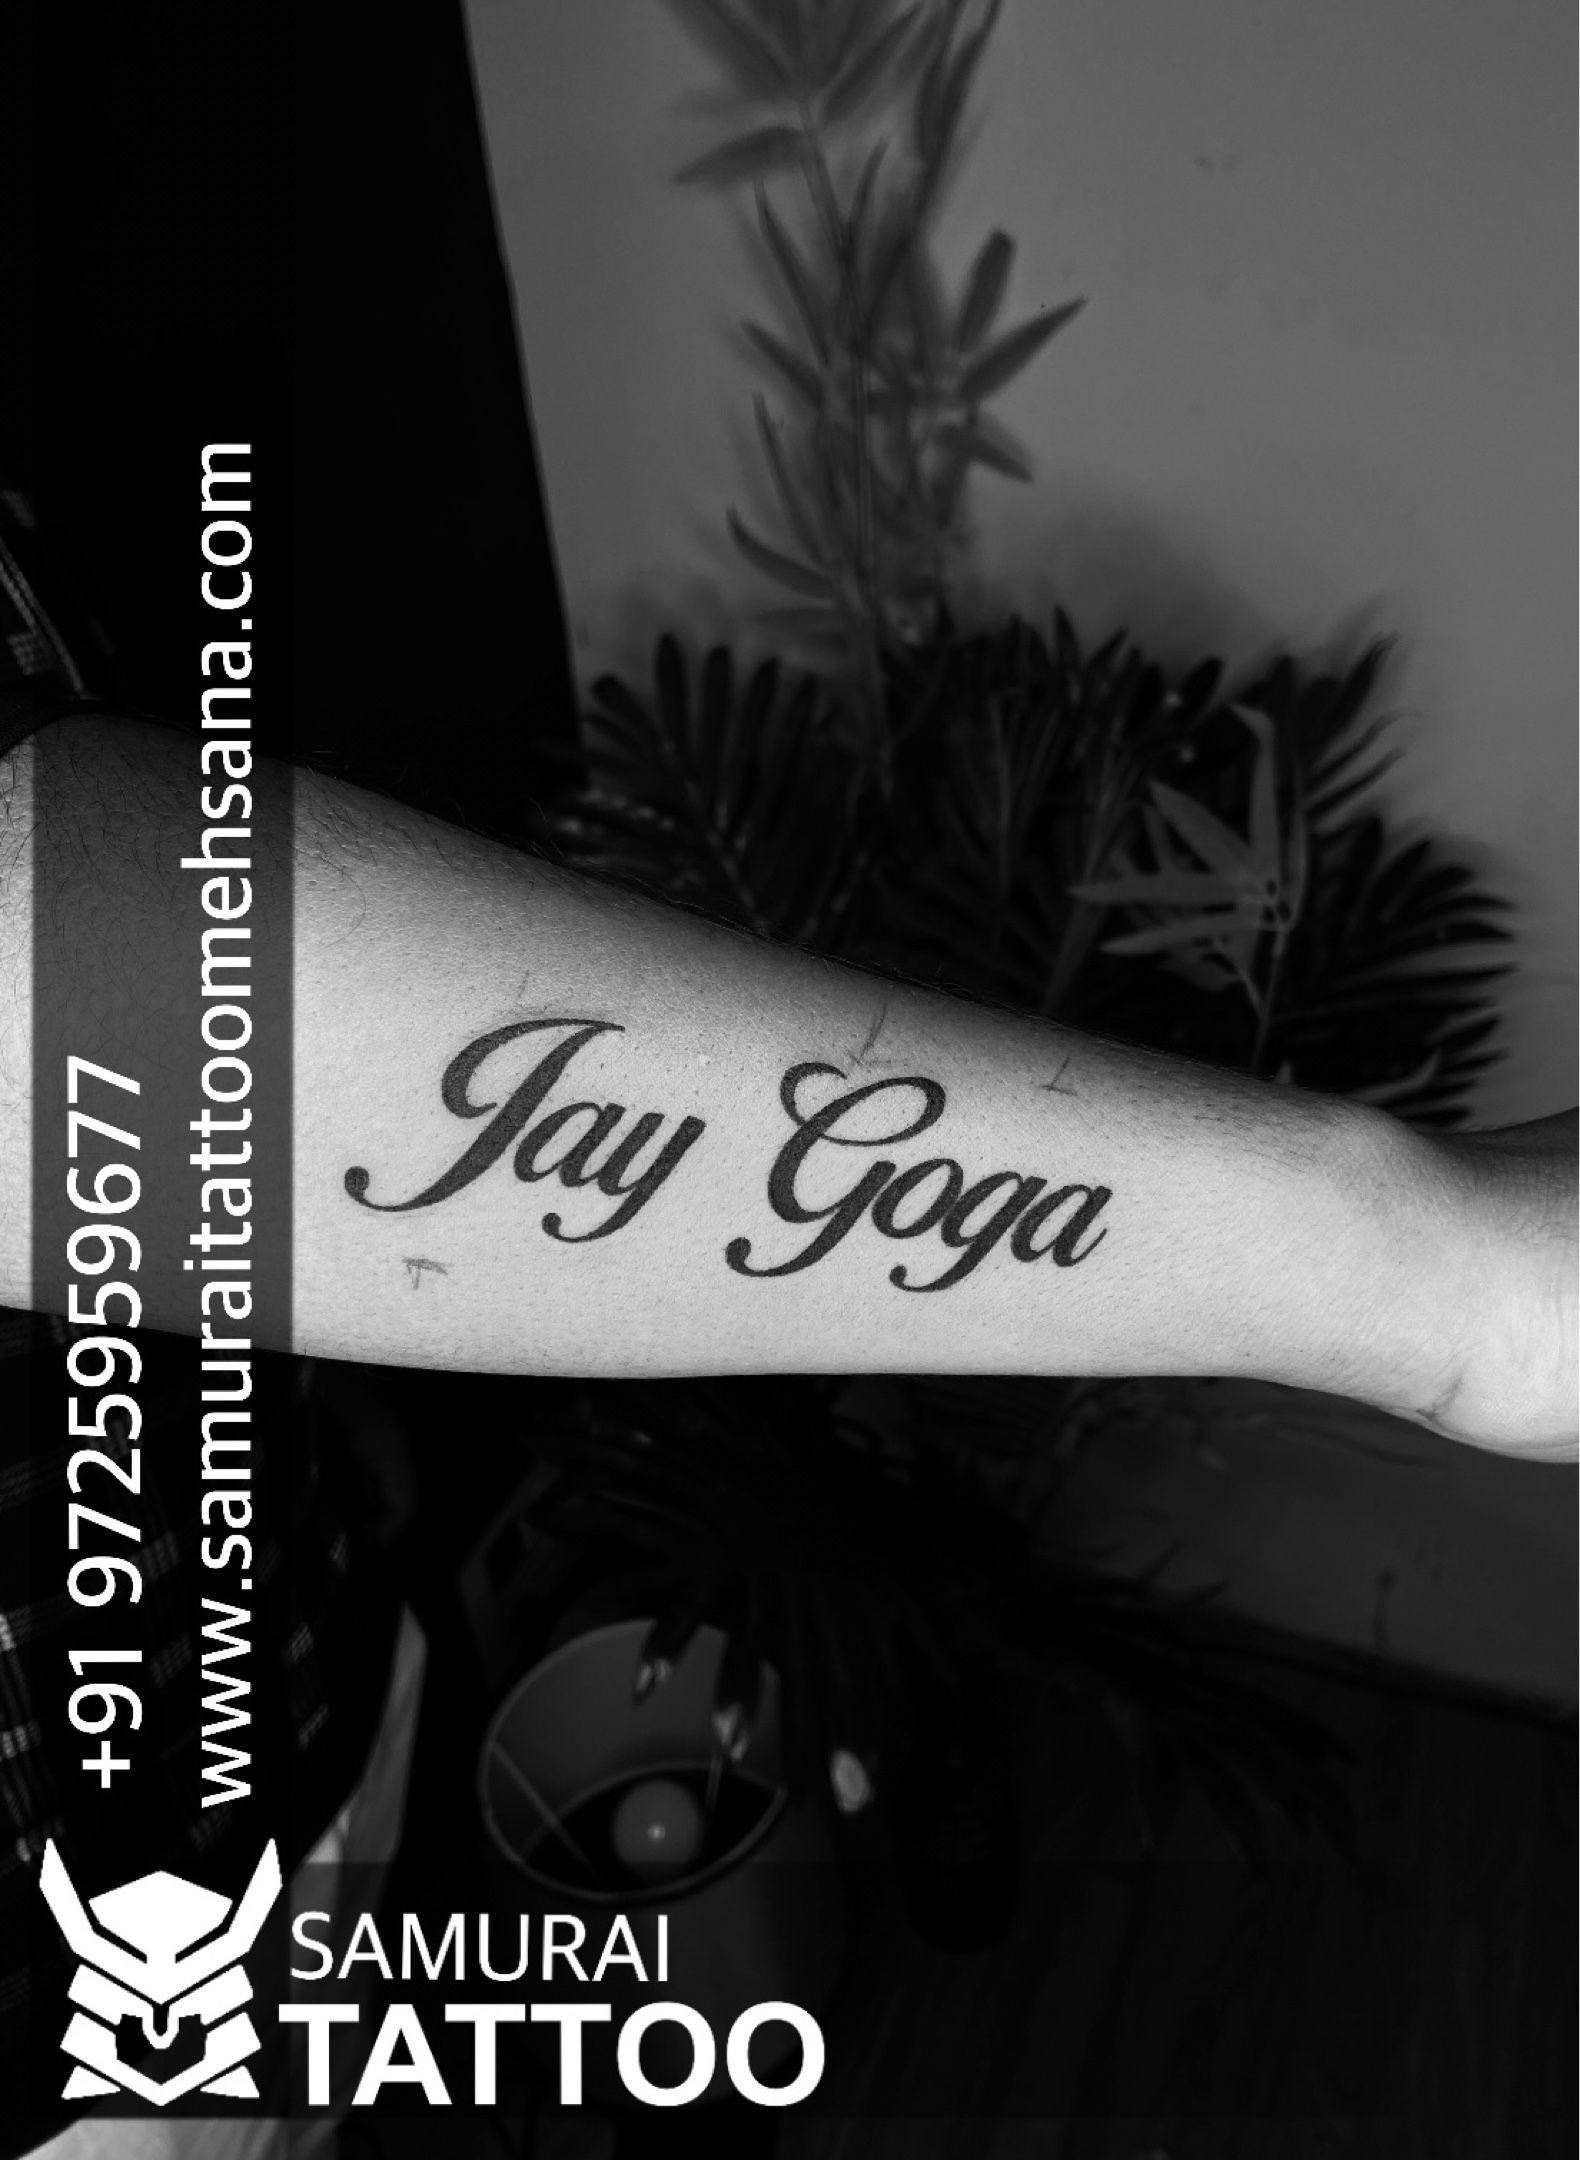 Goga maharaj tattoo |Goga tattoo |Jay goga tattoo |Jay goga maharaj tattoo  | Tattoos, Om tattoo, Shiva tattoo design